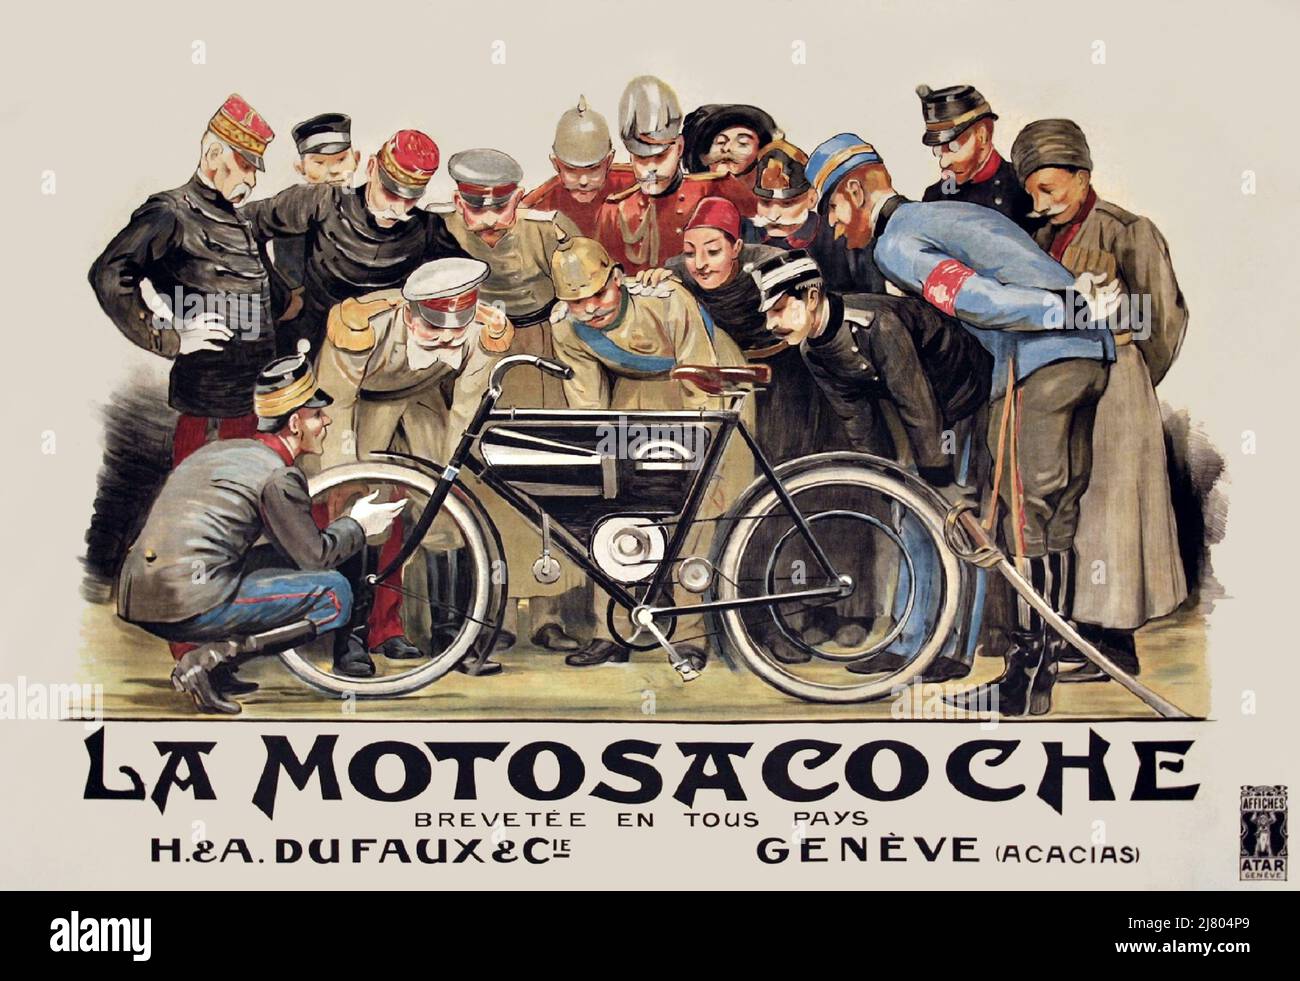 La Motosacoche Brecetee en Tous Pays Stock Photo